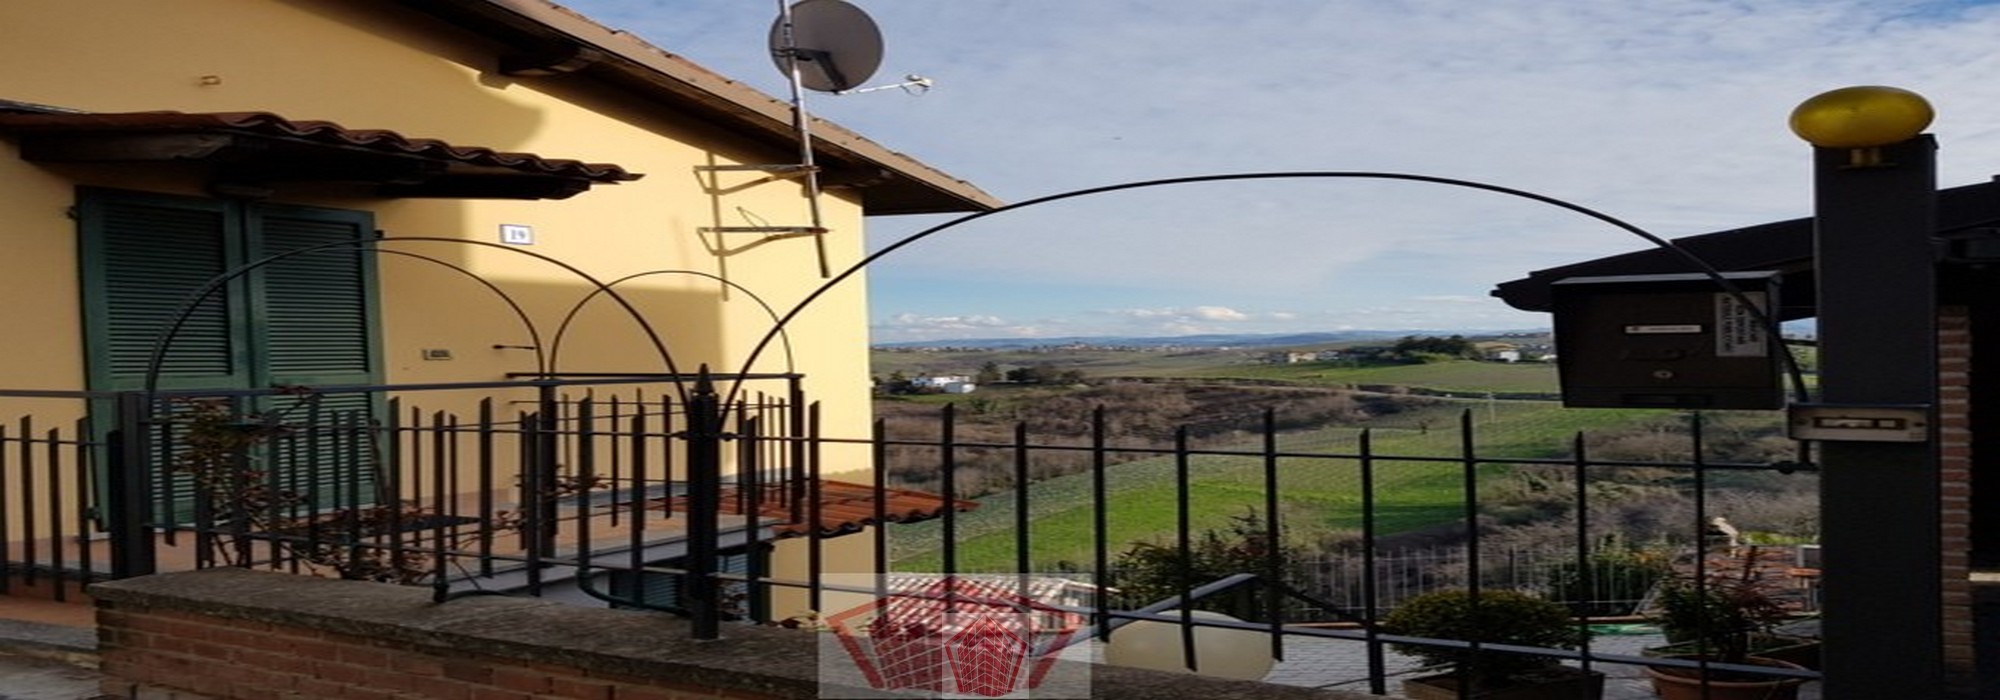 Montu’ Beccaria (PV) VENDITA Villino con vista panoramica Rif. 550